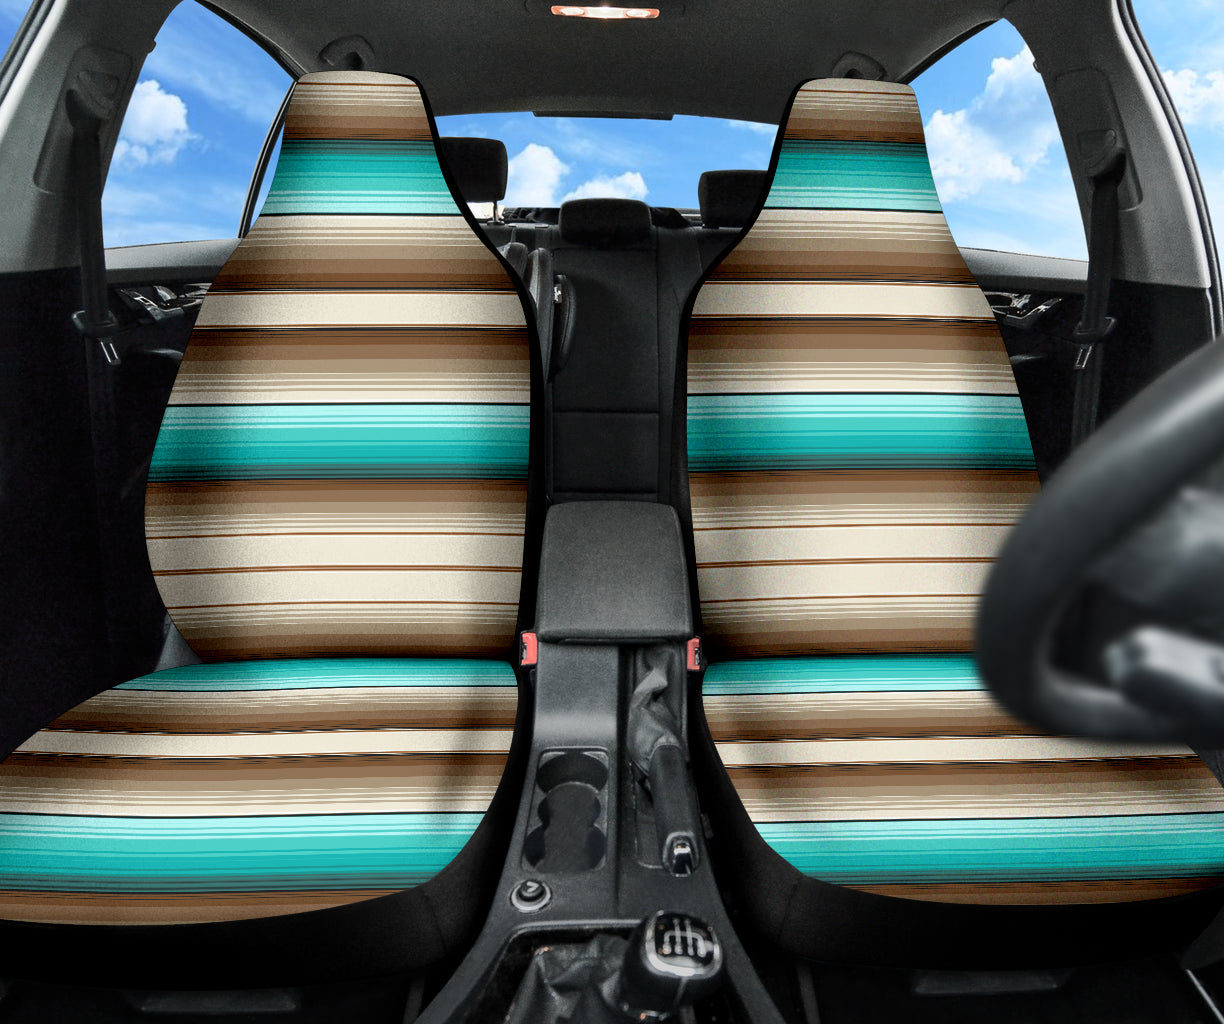 Serape car seat covers, turquoise blue and tan car seat covers, Southwestern, Baja